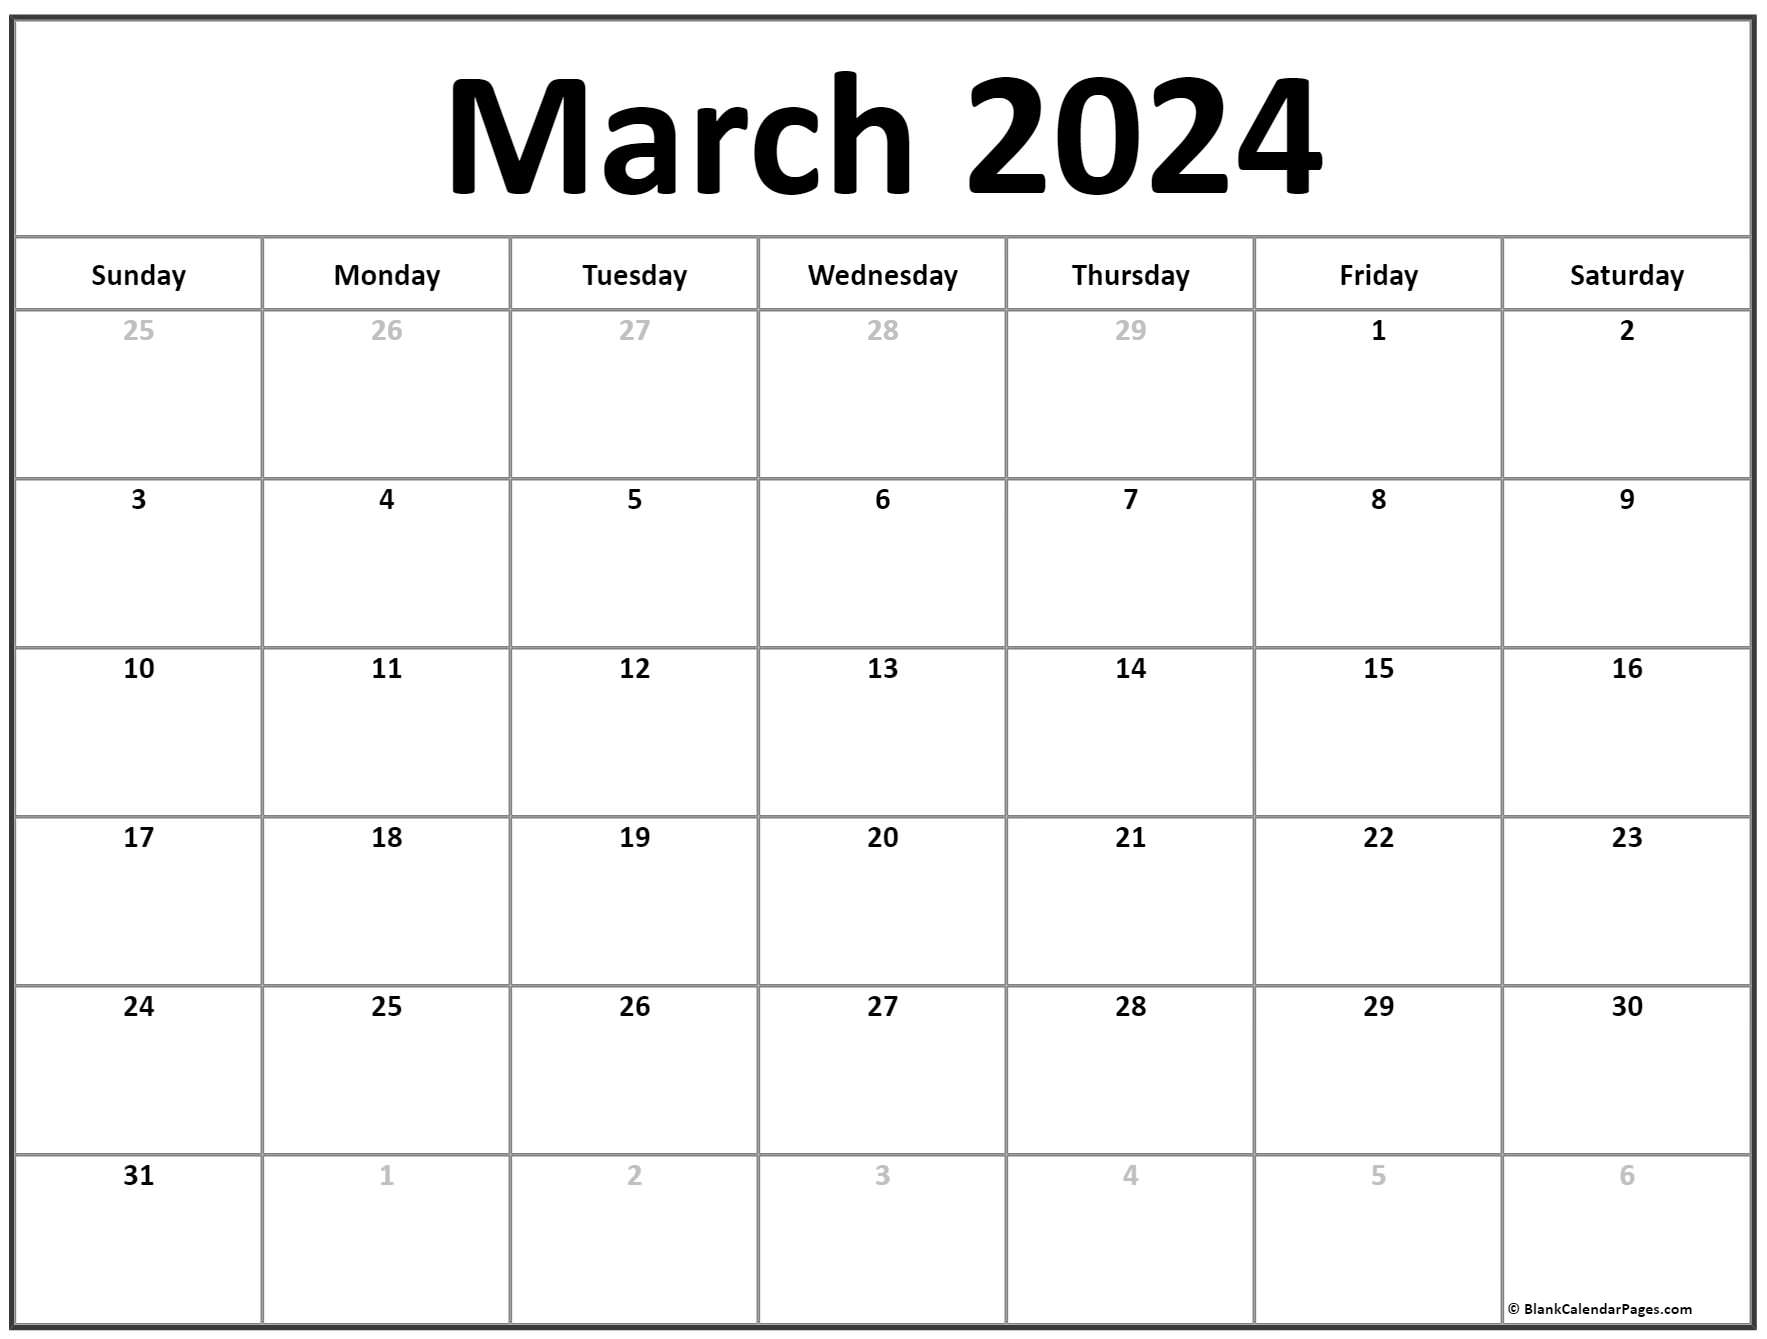 Стричь ногти по лунному календарю март 2024